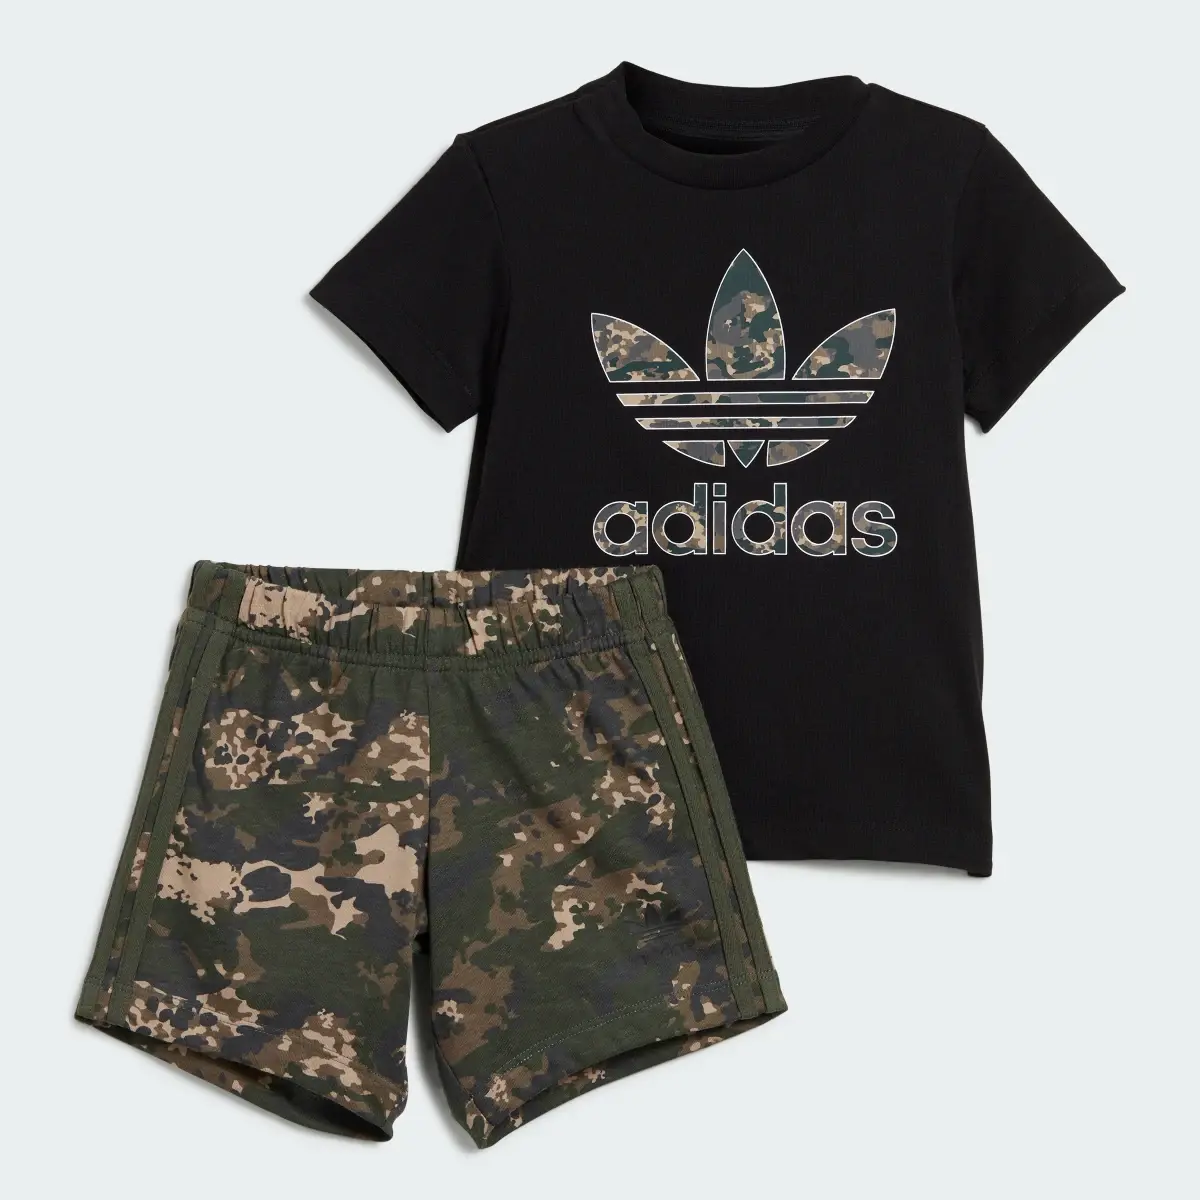 Adidas Camo Shorts and Tee Set. 1